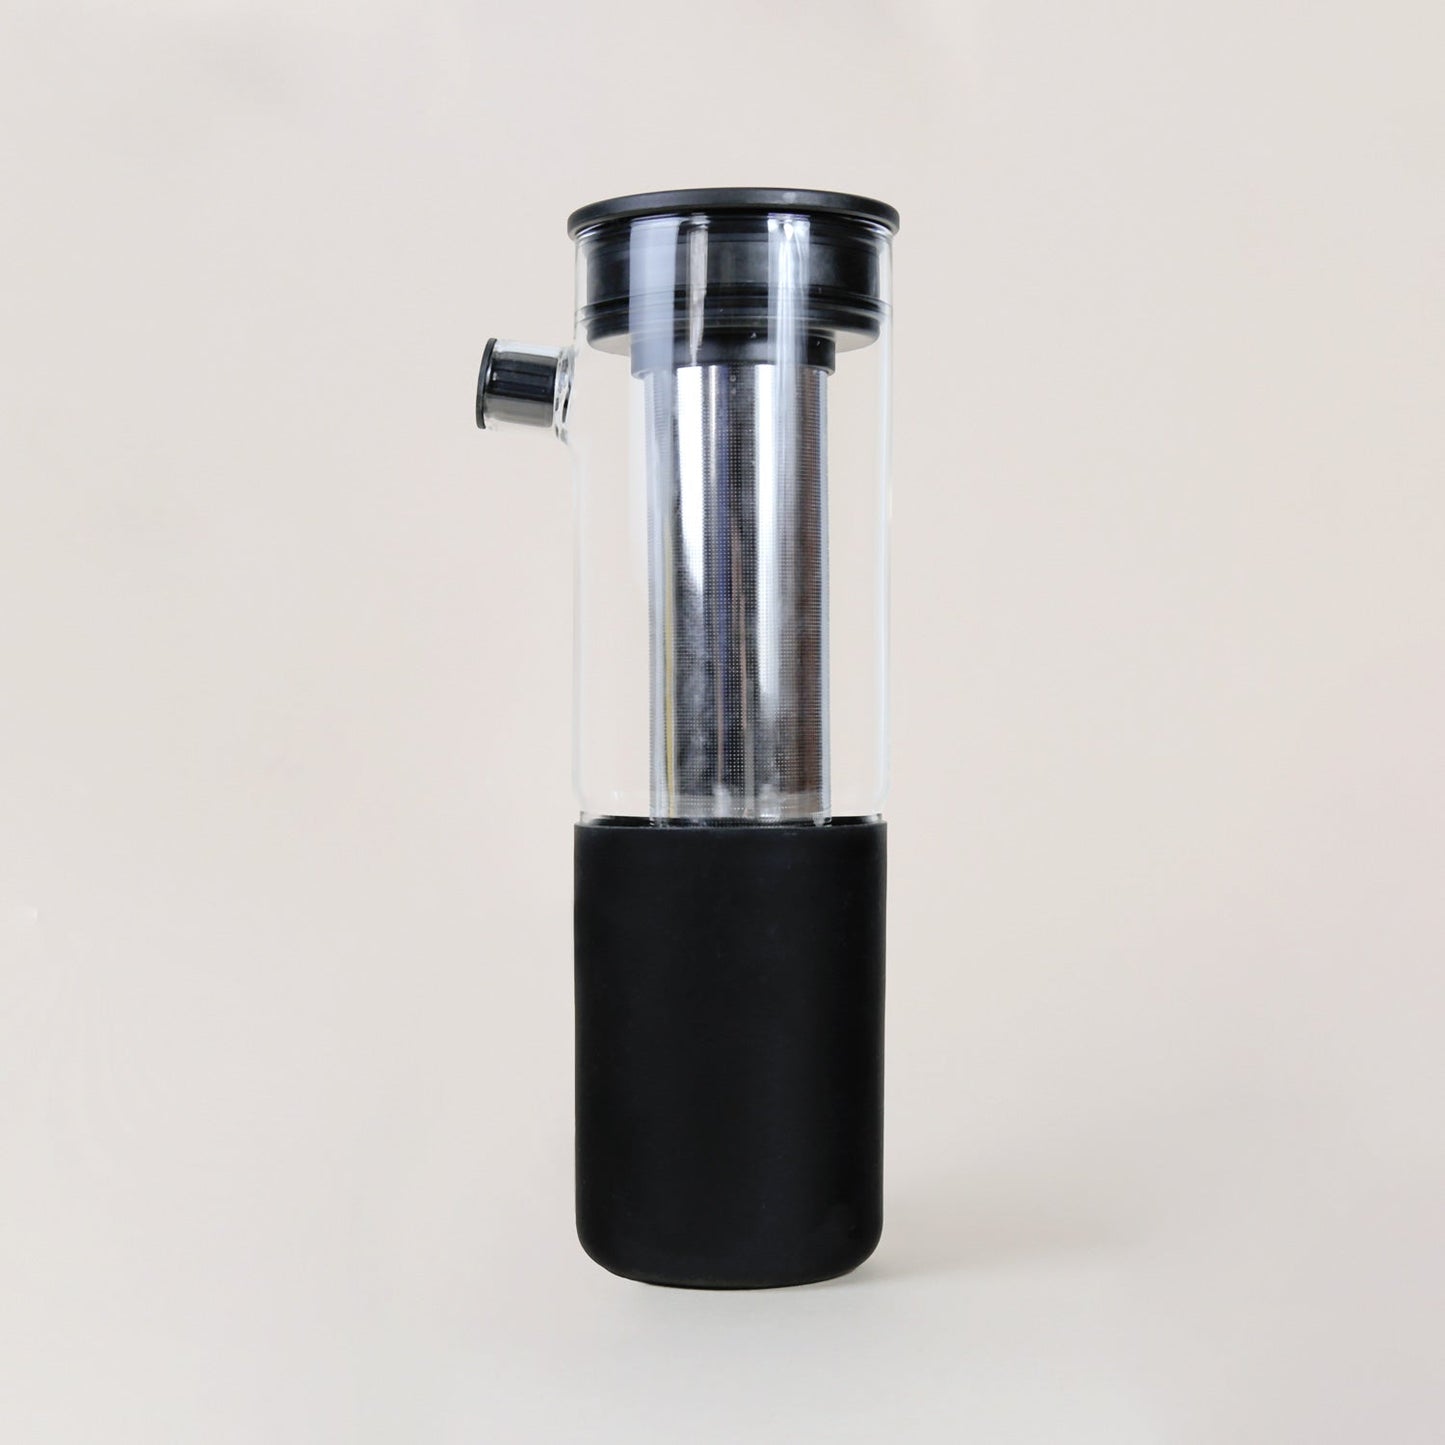 Glass Iced Tea Jug, Tea Pitcher with Filter